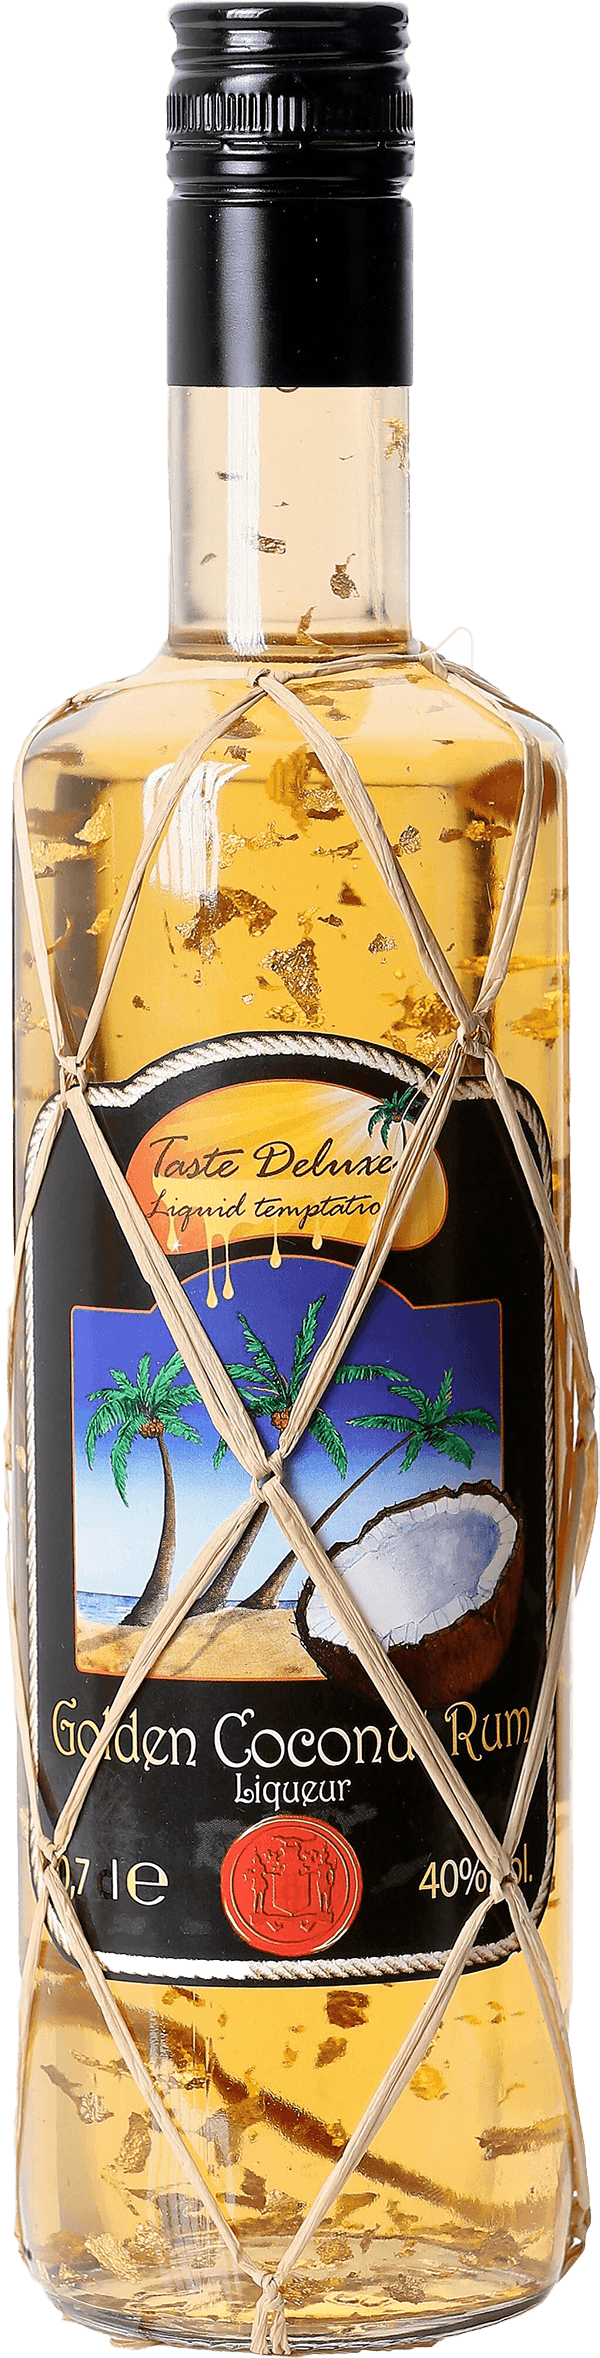 Taste DeLuxe Golden Coconut Rum Liqueur 40% Golden Leaf Edition